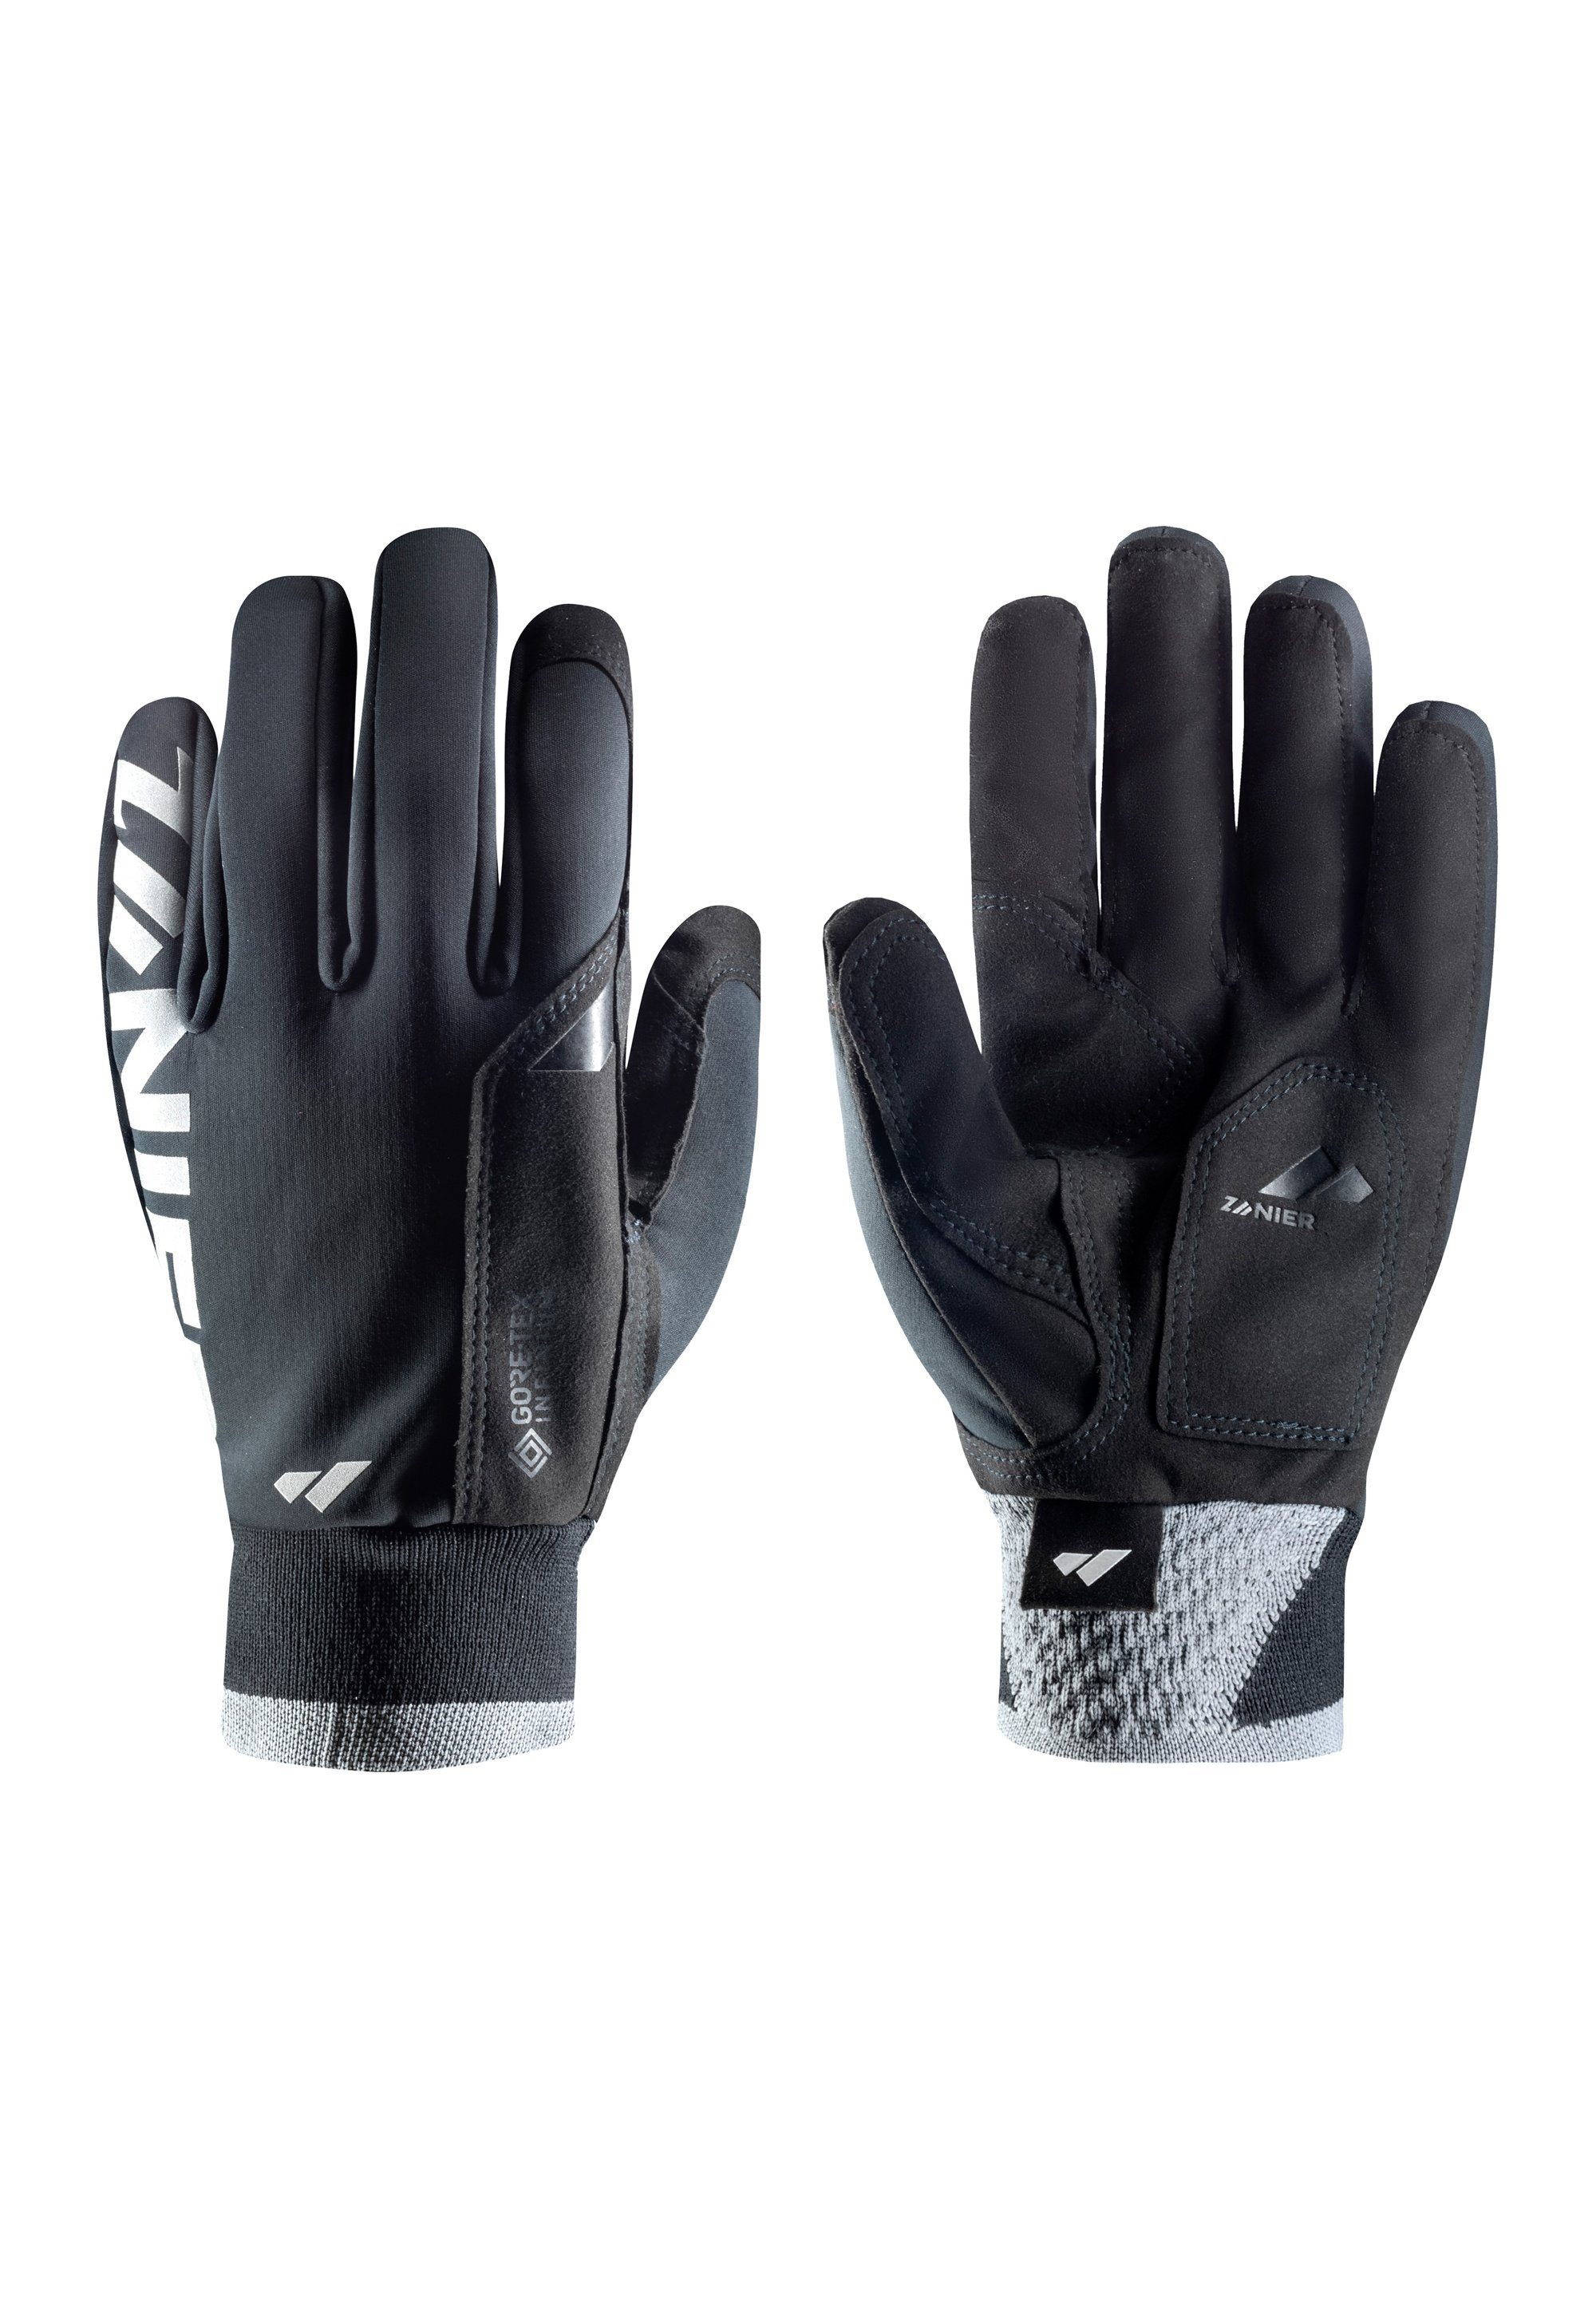 We PRO Multisporthandschuhe gloves focus on XC Zanier